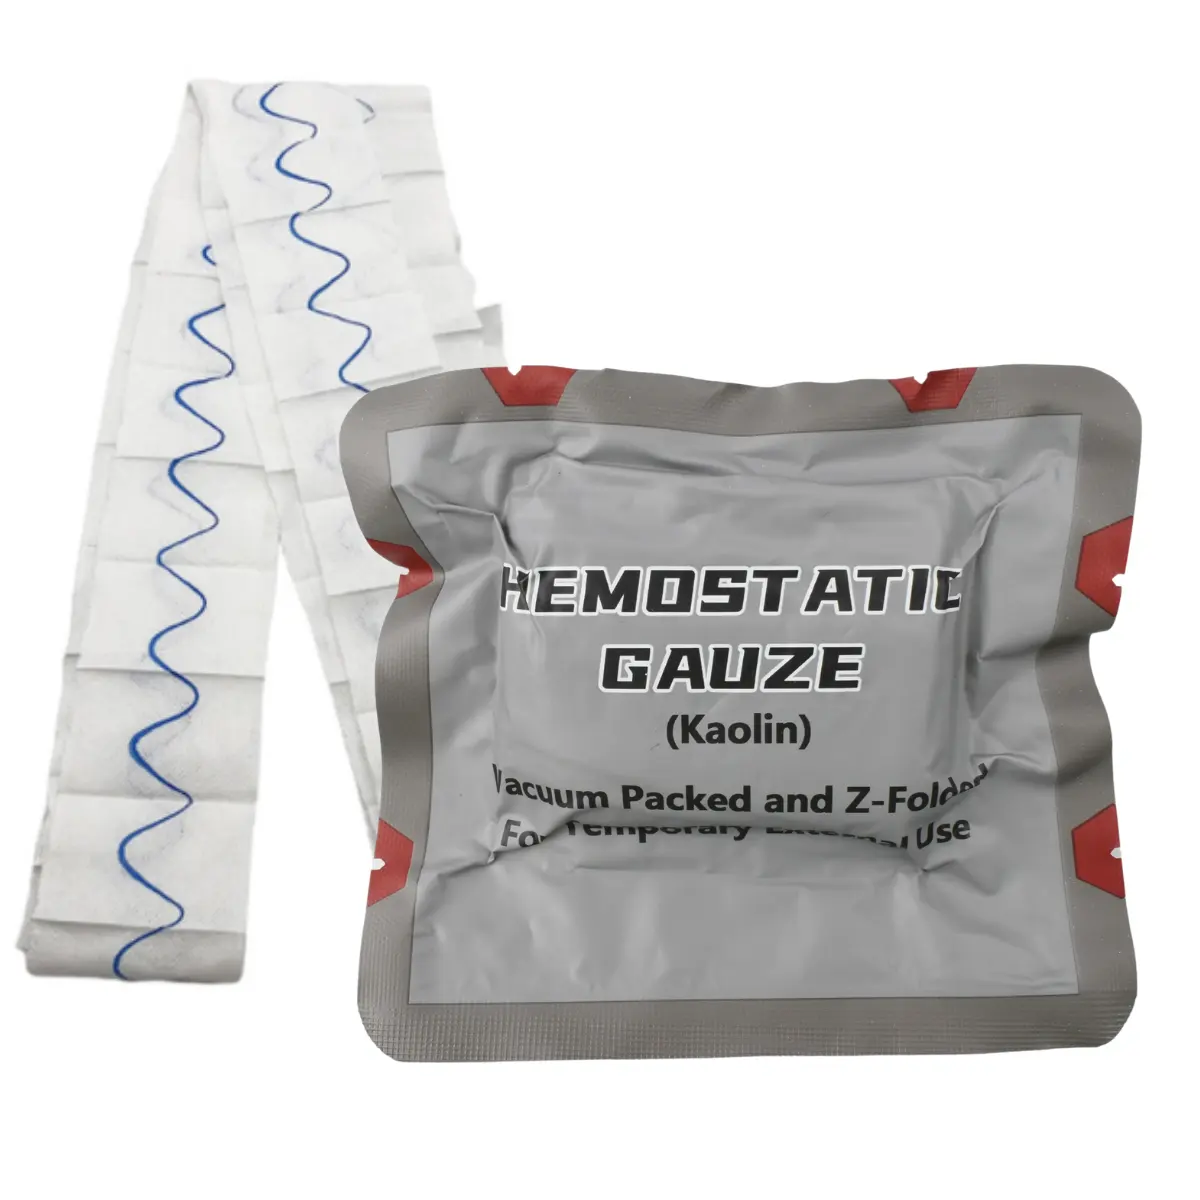 Anthrive New Arrival Tactical Emergency First Aid Combat Compress Gauze Z-Folded Kaolin Hemostatic Gauze